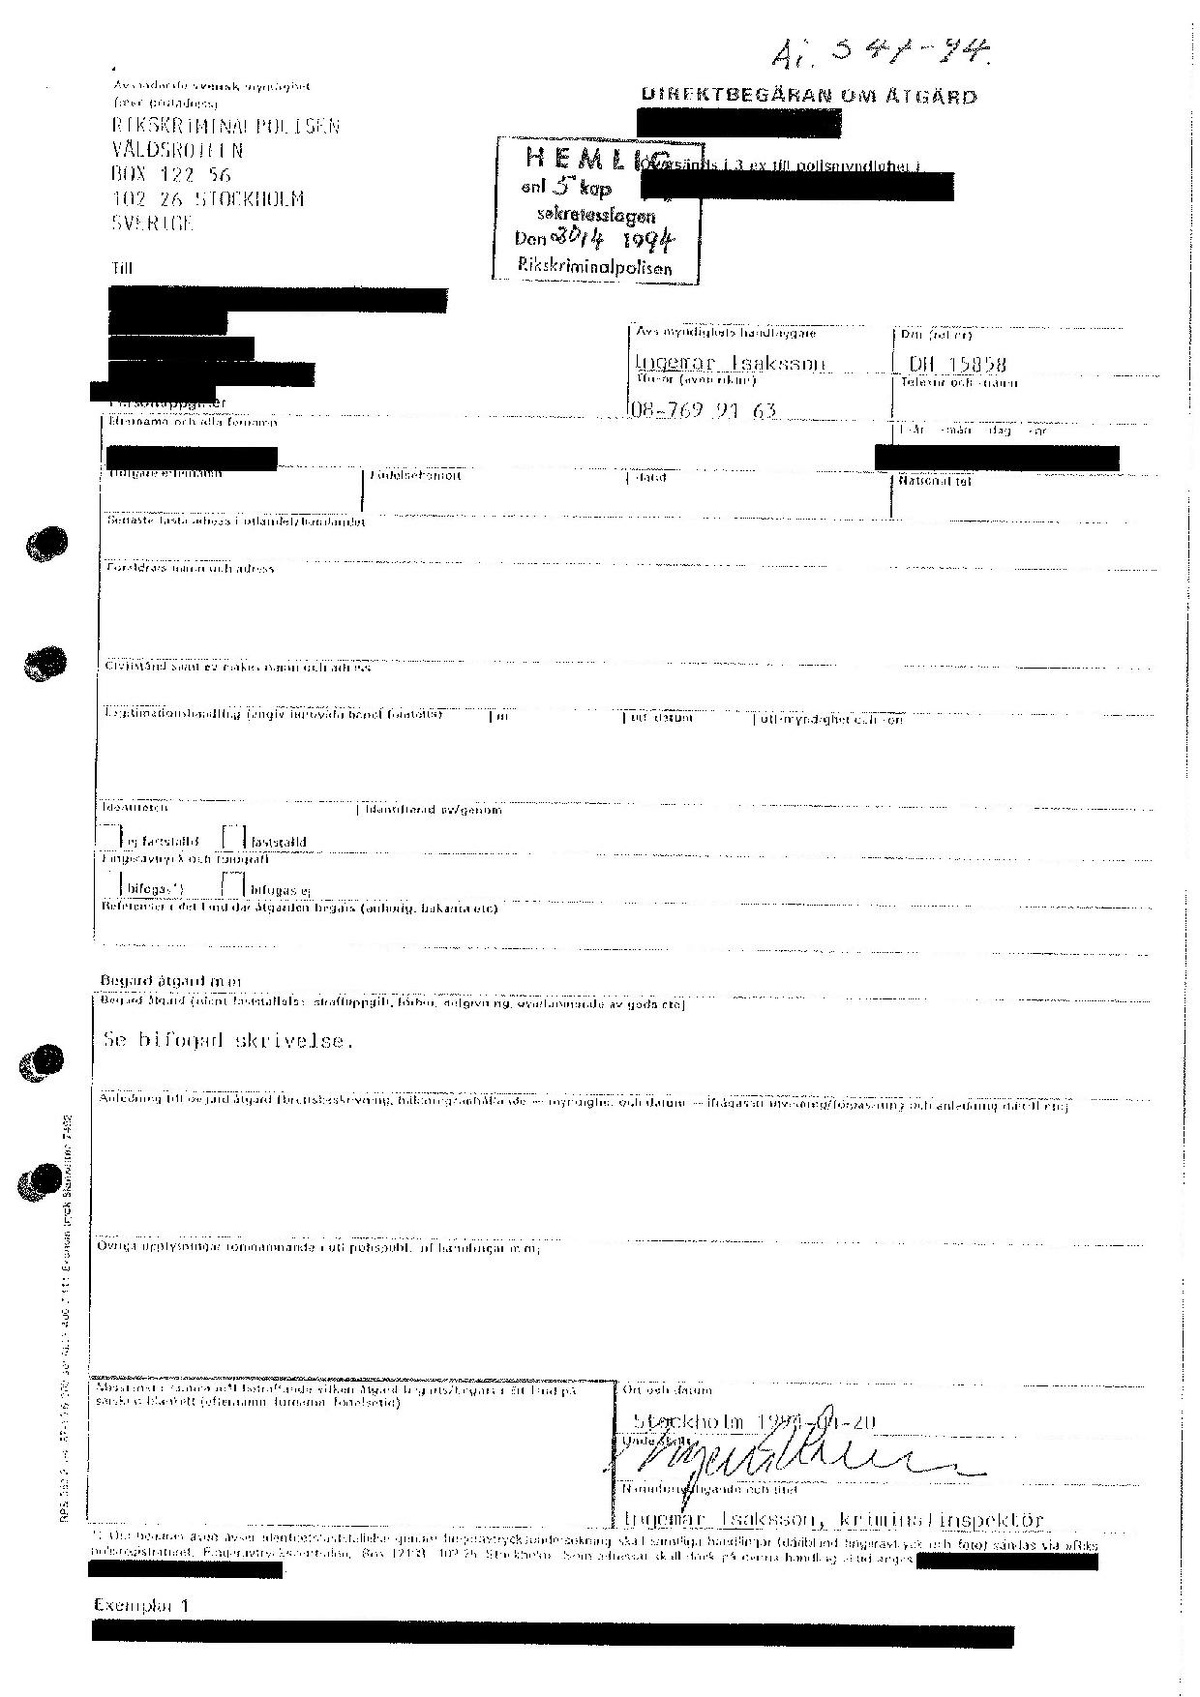 Pol-1994-04-20 DH16162-02 Kontroll med polisen i Danmark spaning efter GF.pdf